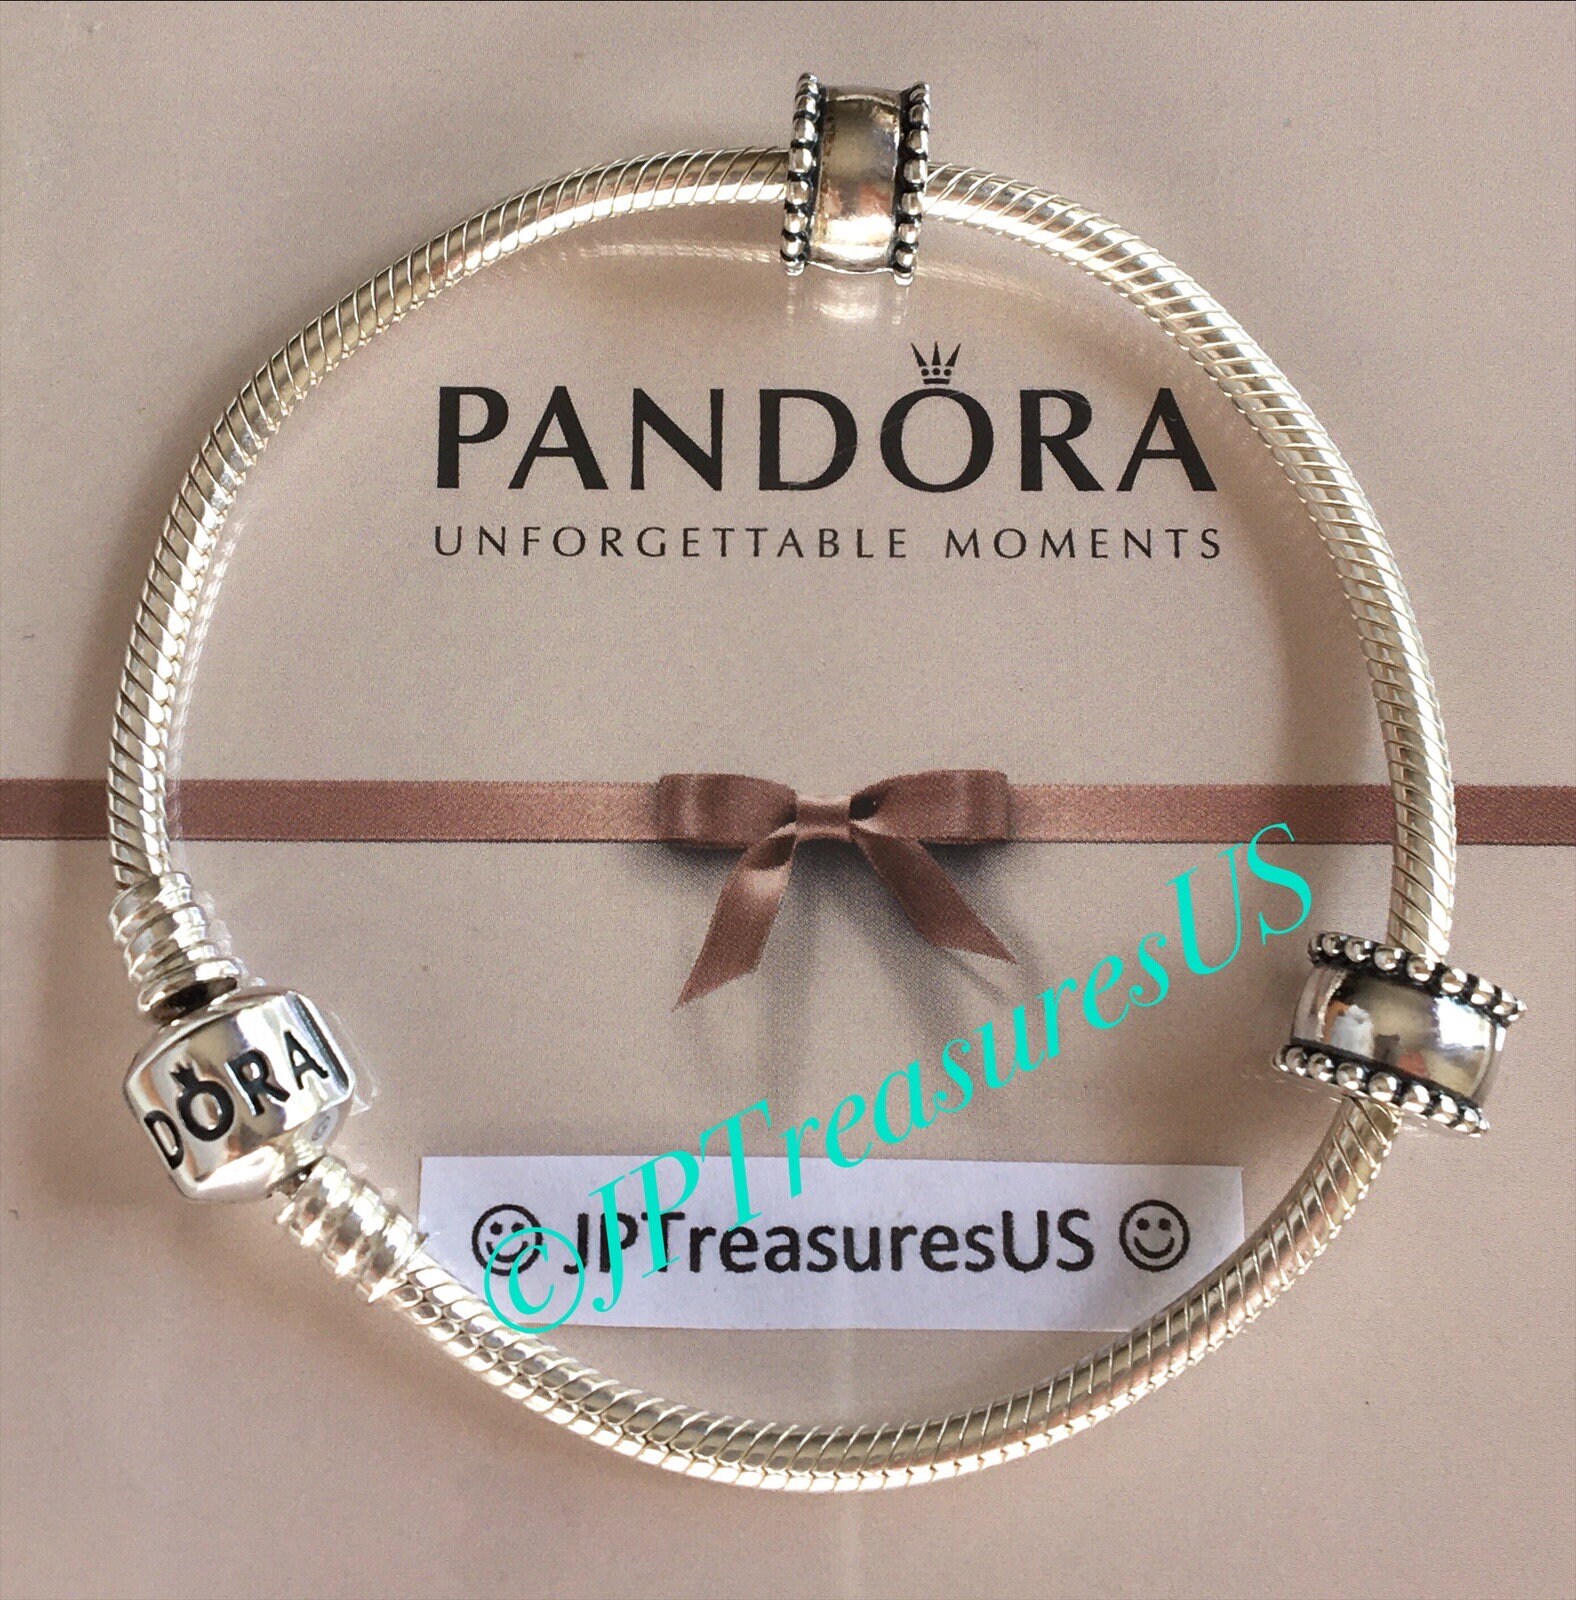 Authentic pandora charm bracelet with 17 pandora charms Spacers 925  Bracelet 7”B